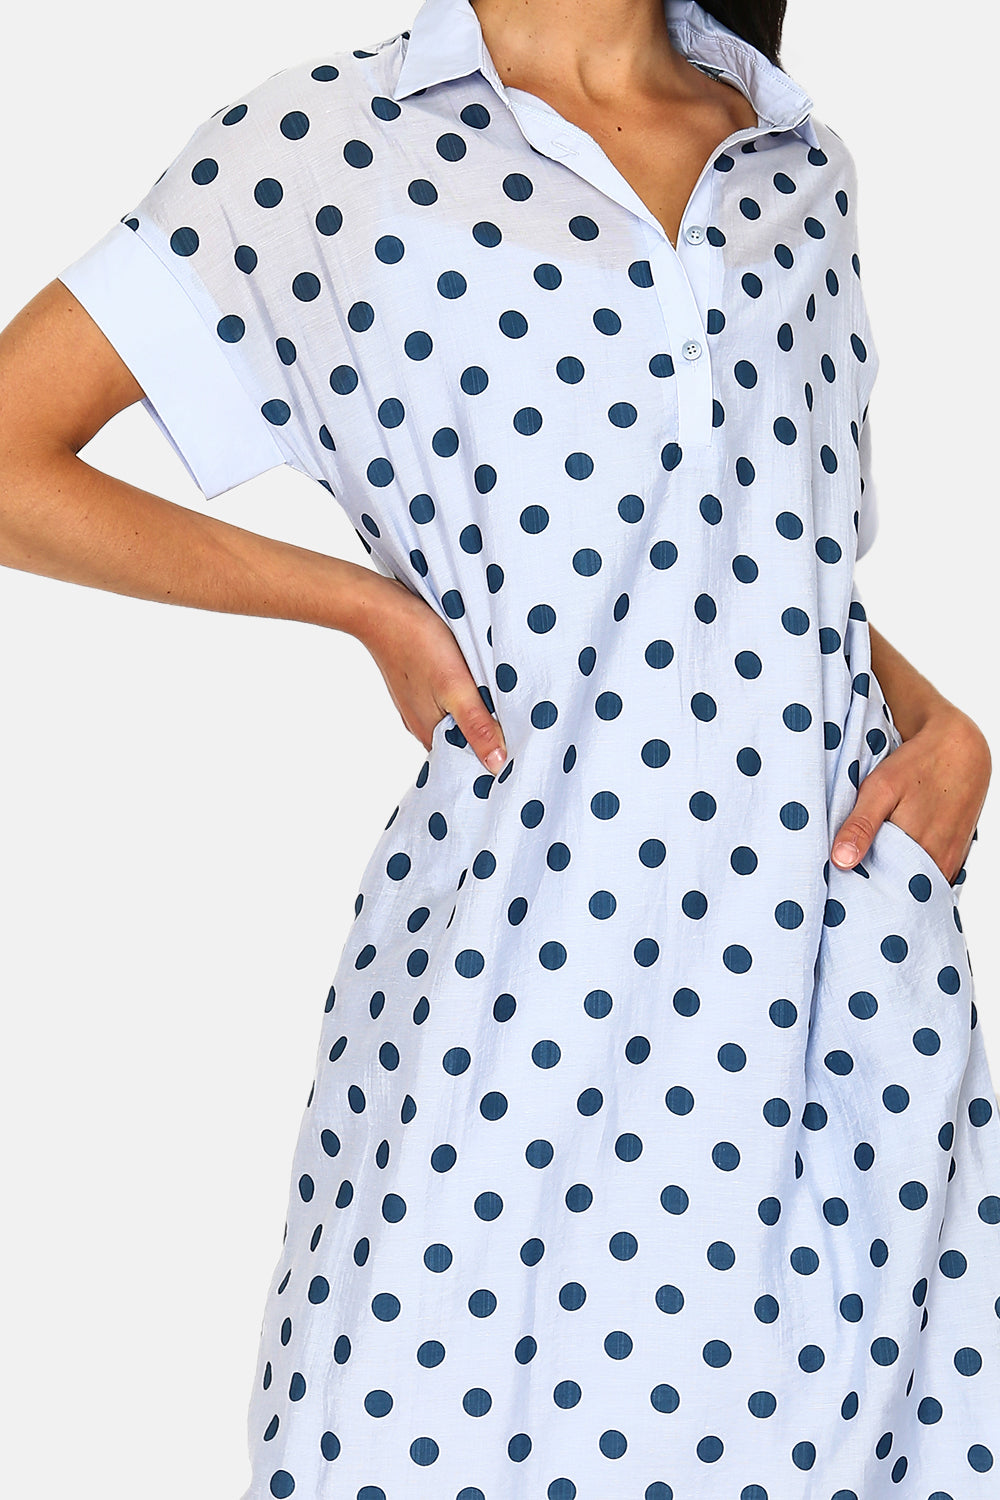 Polka dot print shirt dress + matching strap